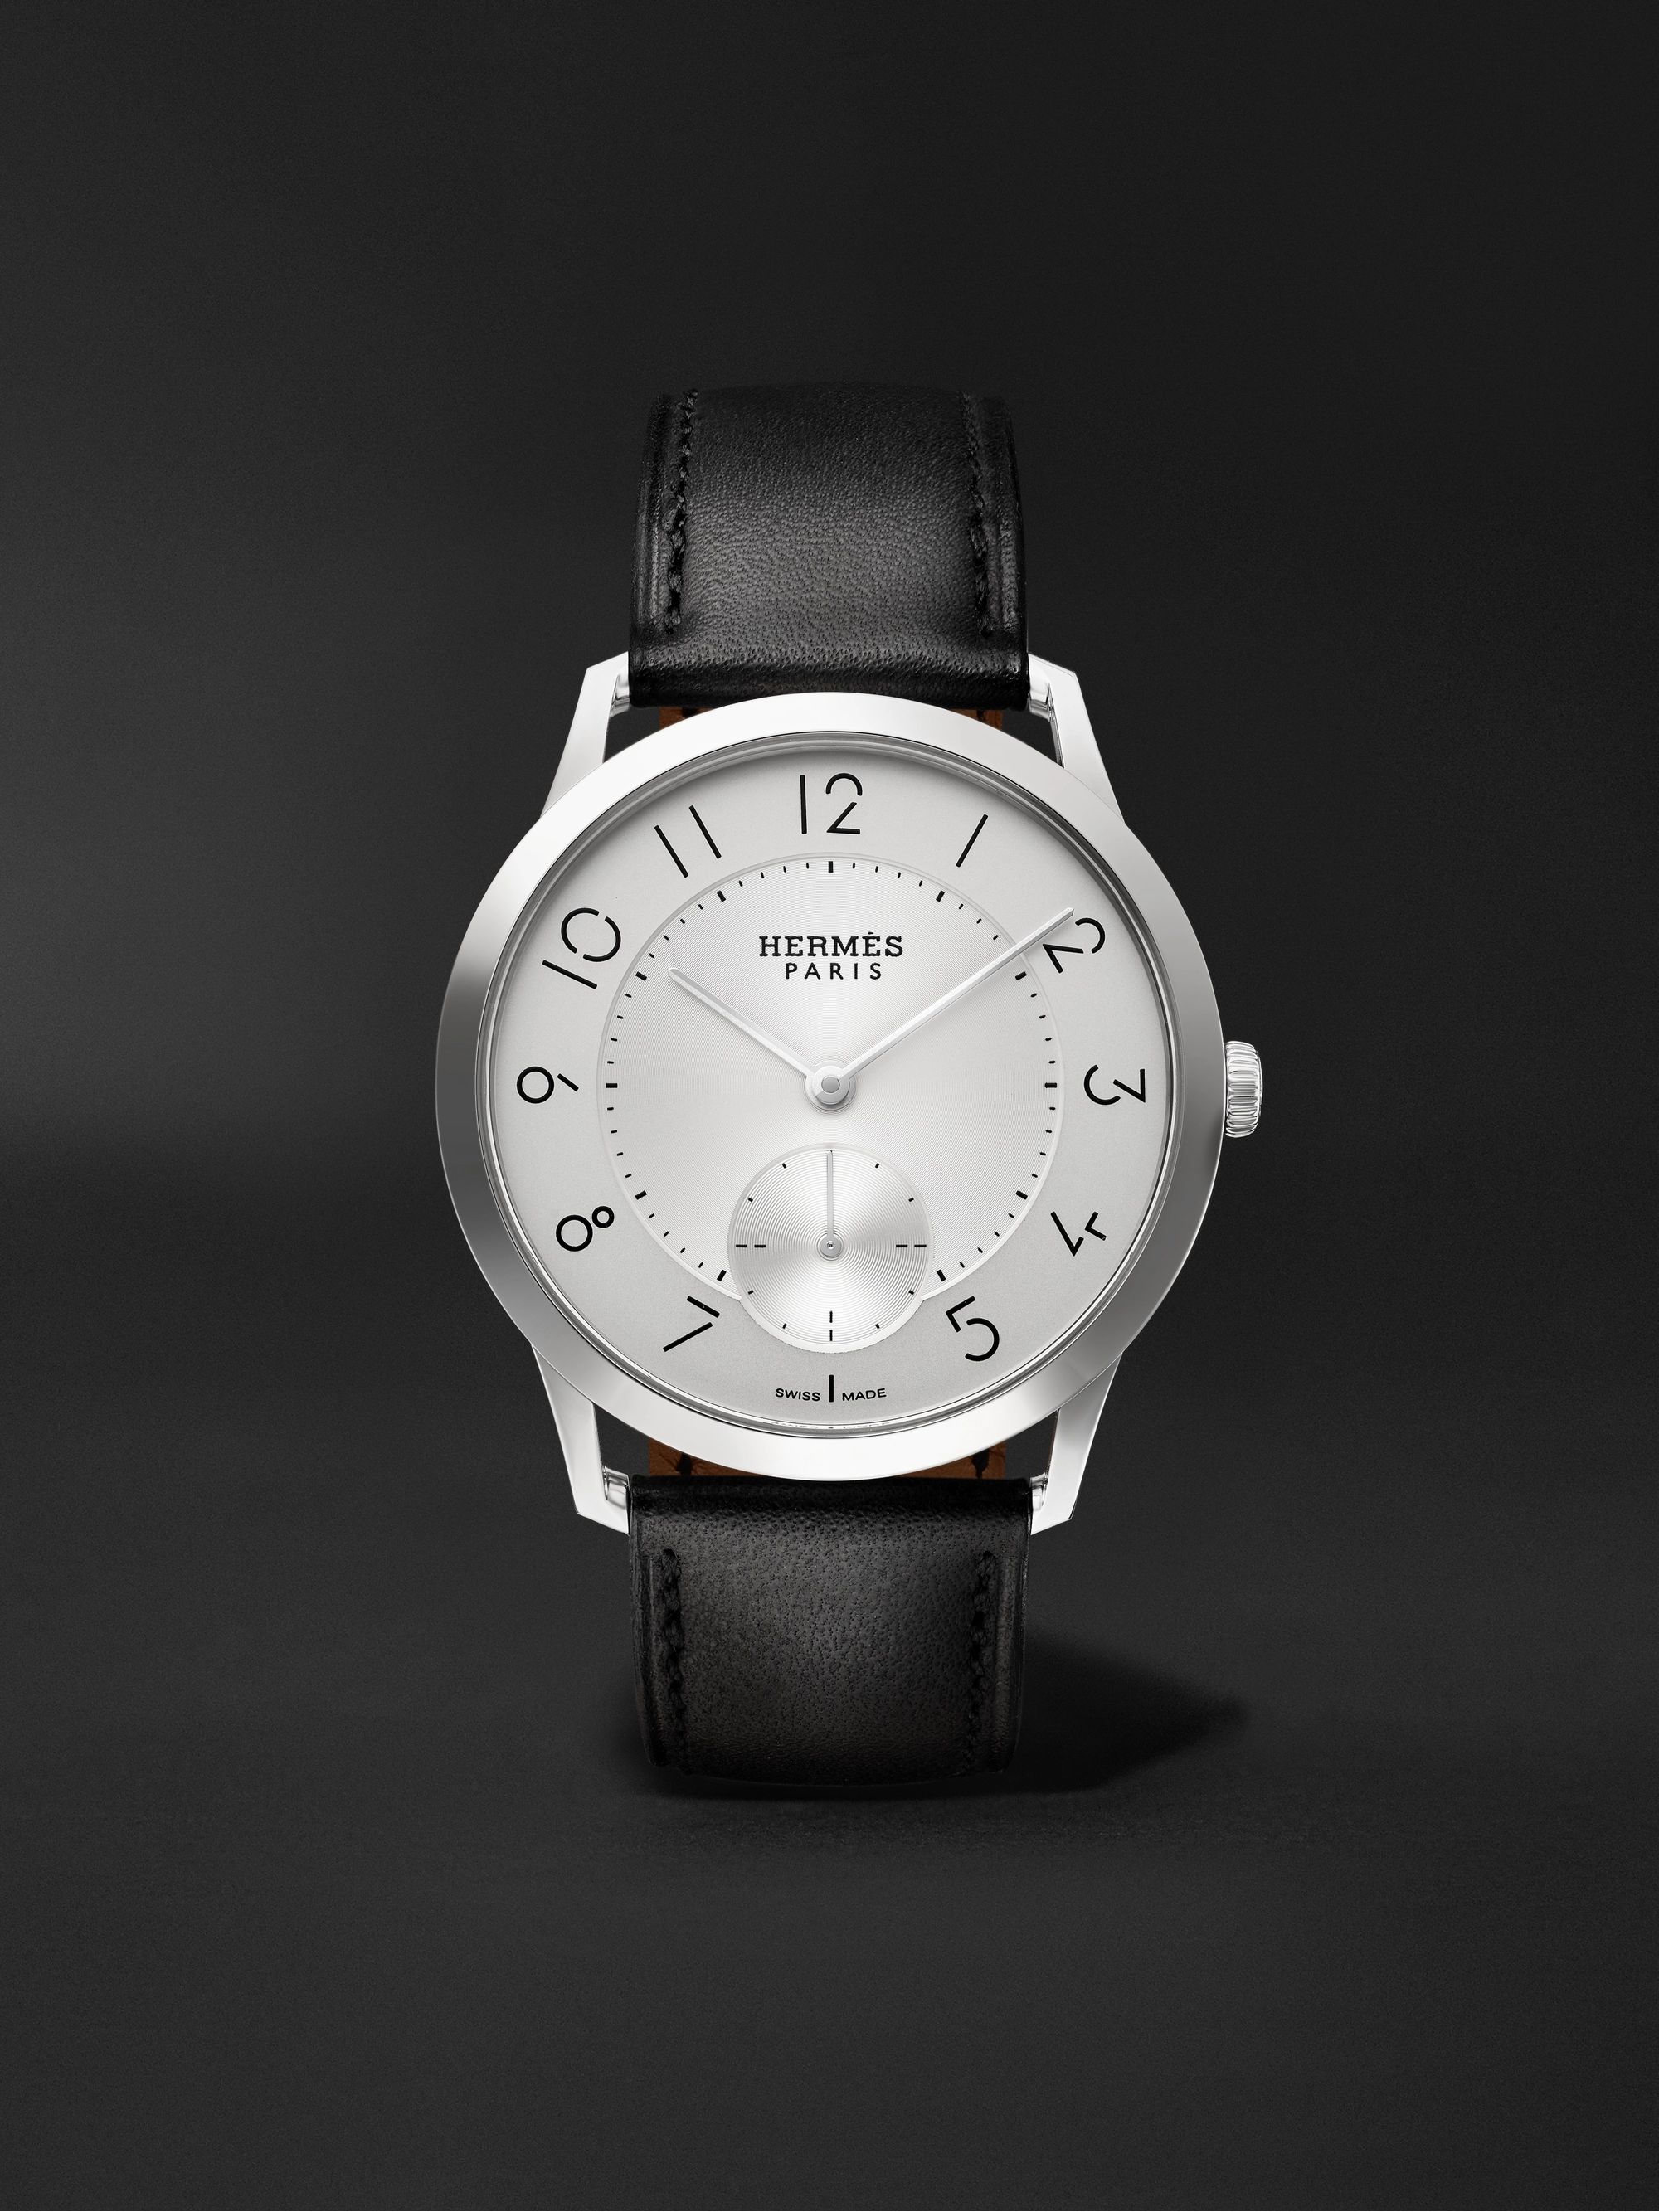 HERMÈS TIMEPIECES Slim d'Hermès Acier Automatic 39.5mm Stainless Steel and Leather Watch, Ref. No. 052839WW00